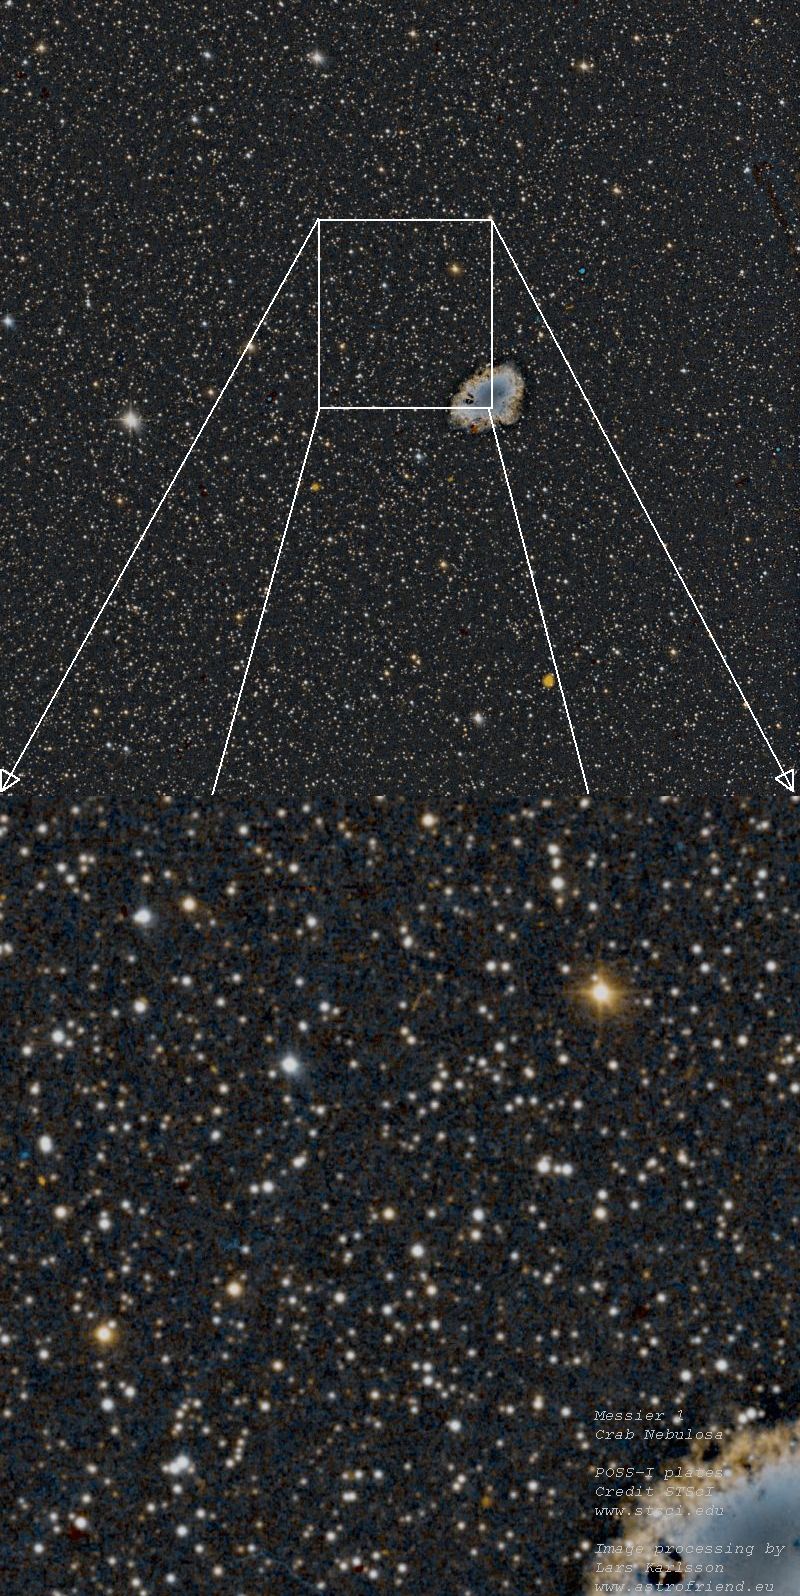 POSS-I: Messier 1, Crab nebula